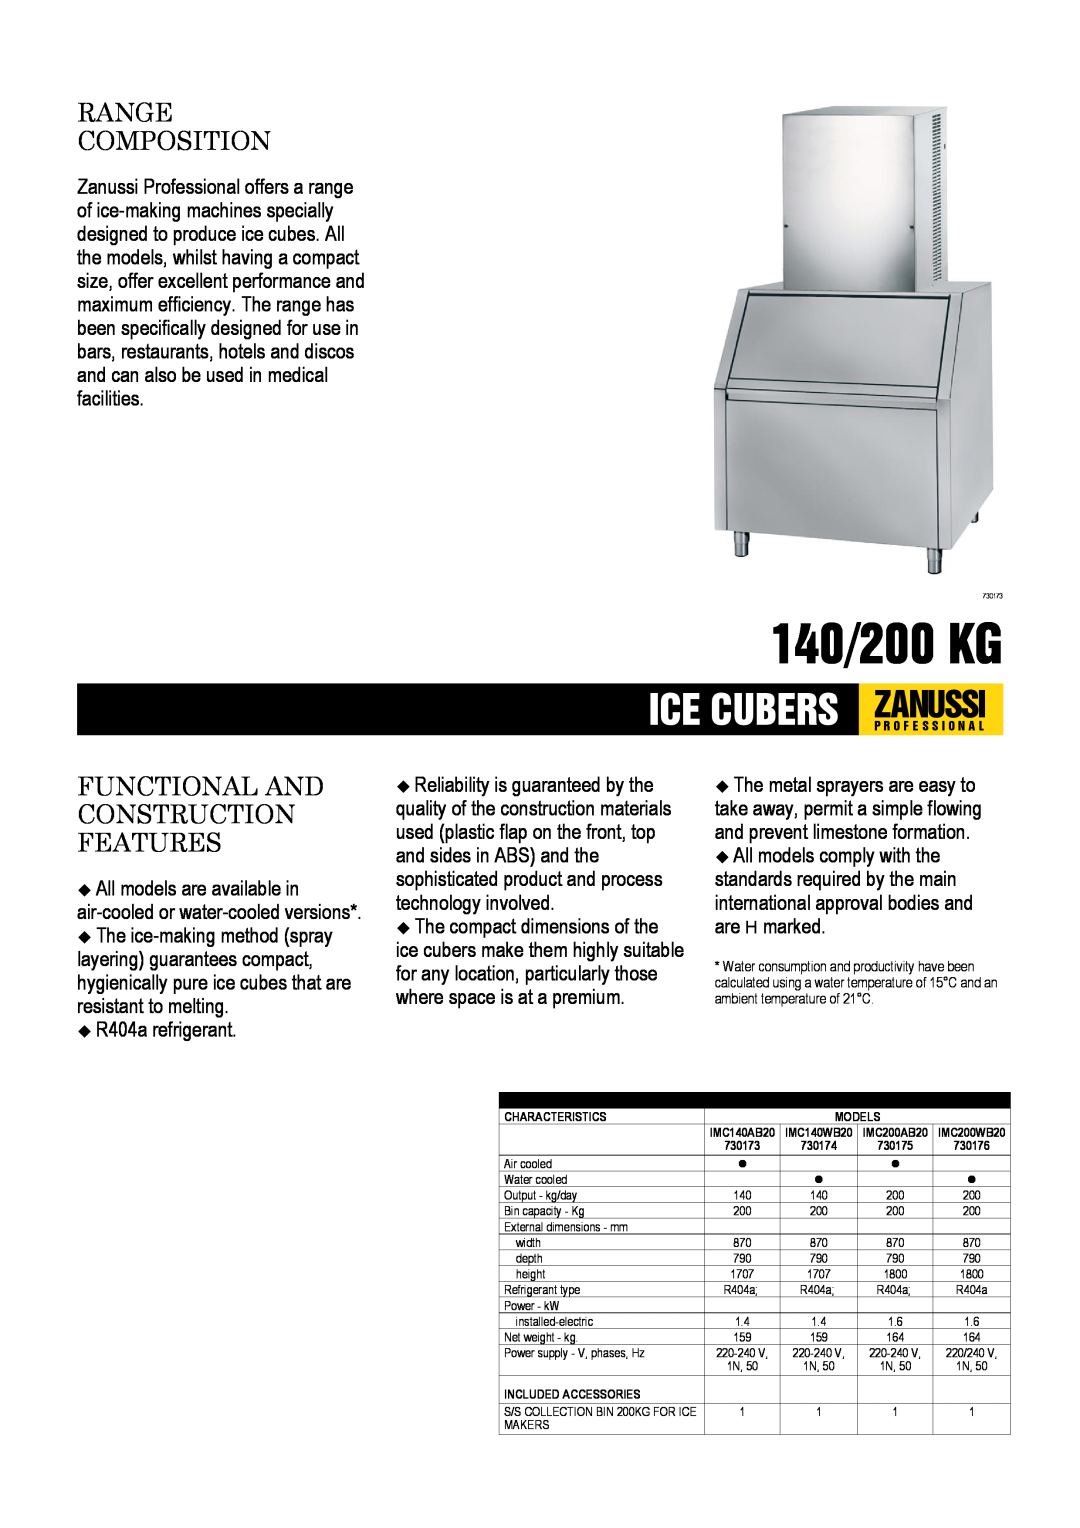 Electrolux IMC140AB20, IMC140WB20 dimensions 140/200 KG, Range Composition, Functional And Construction Features 